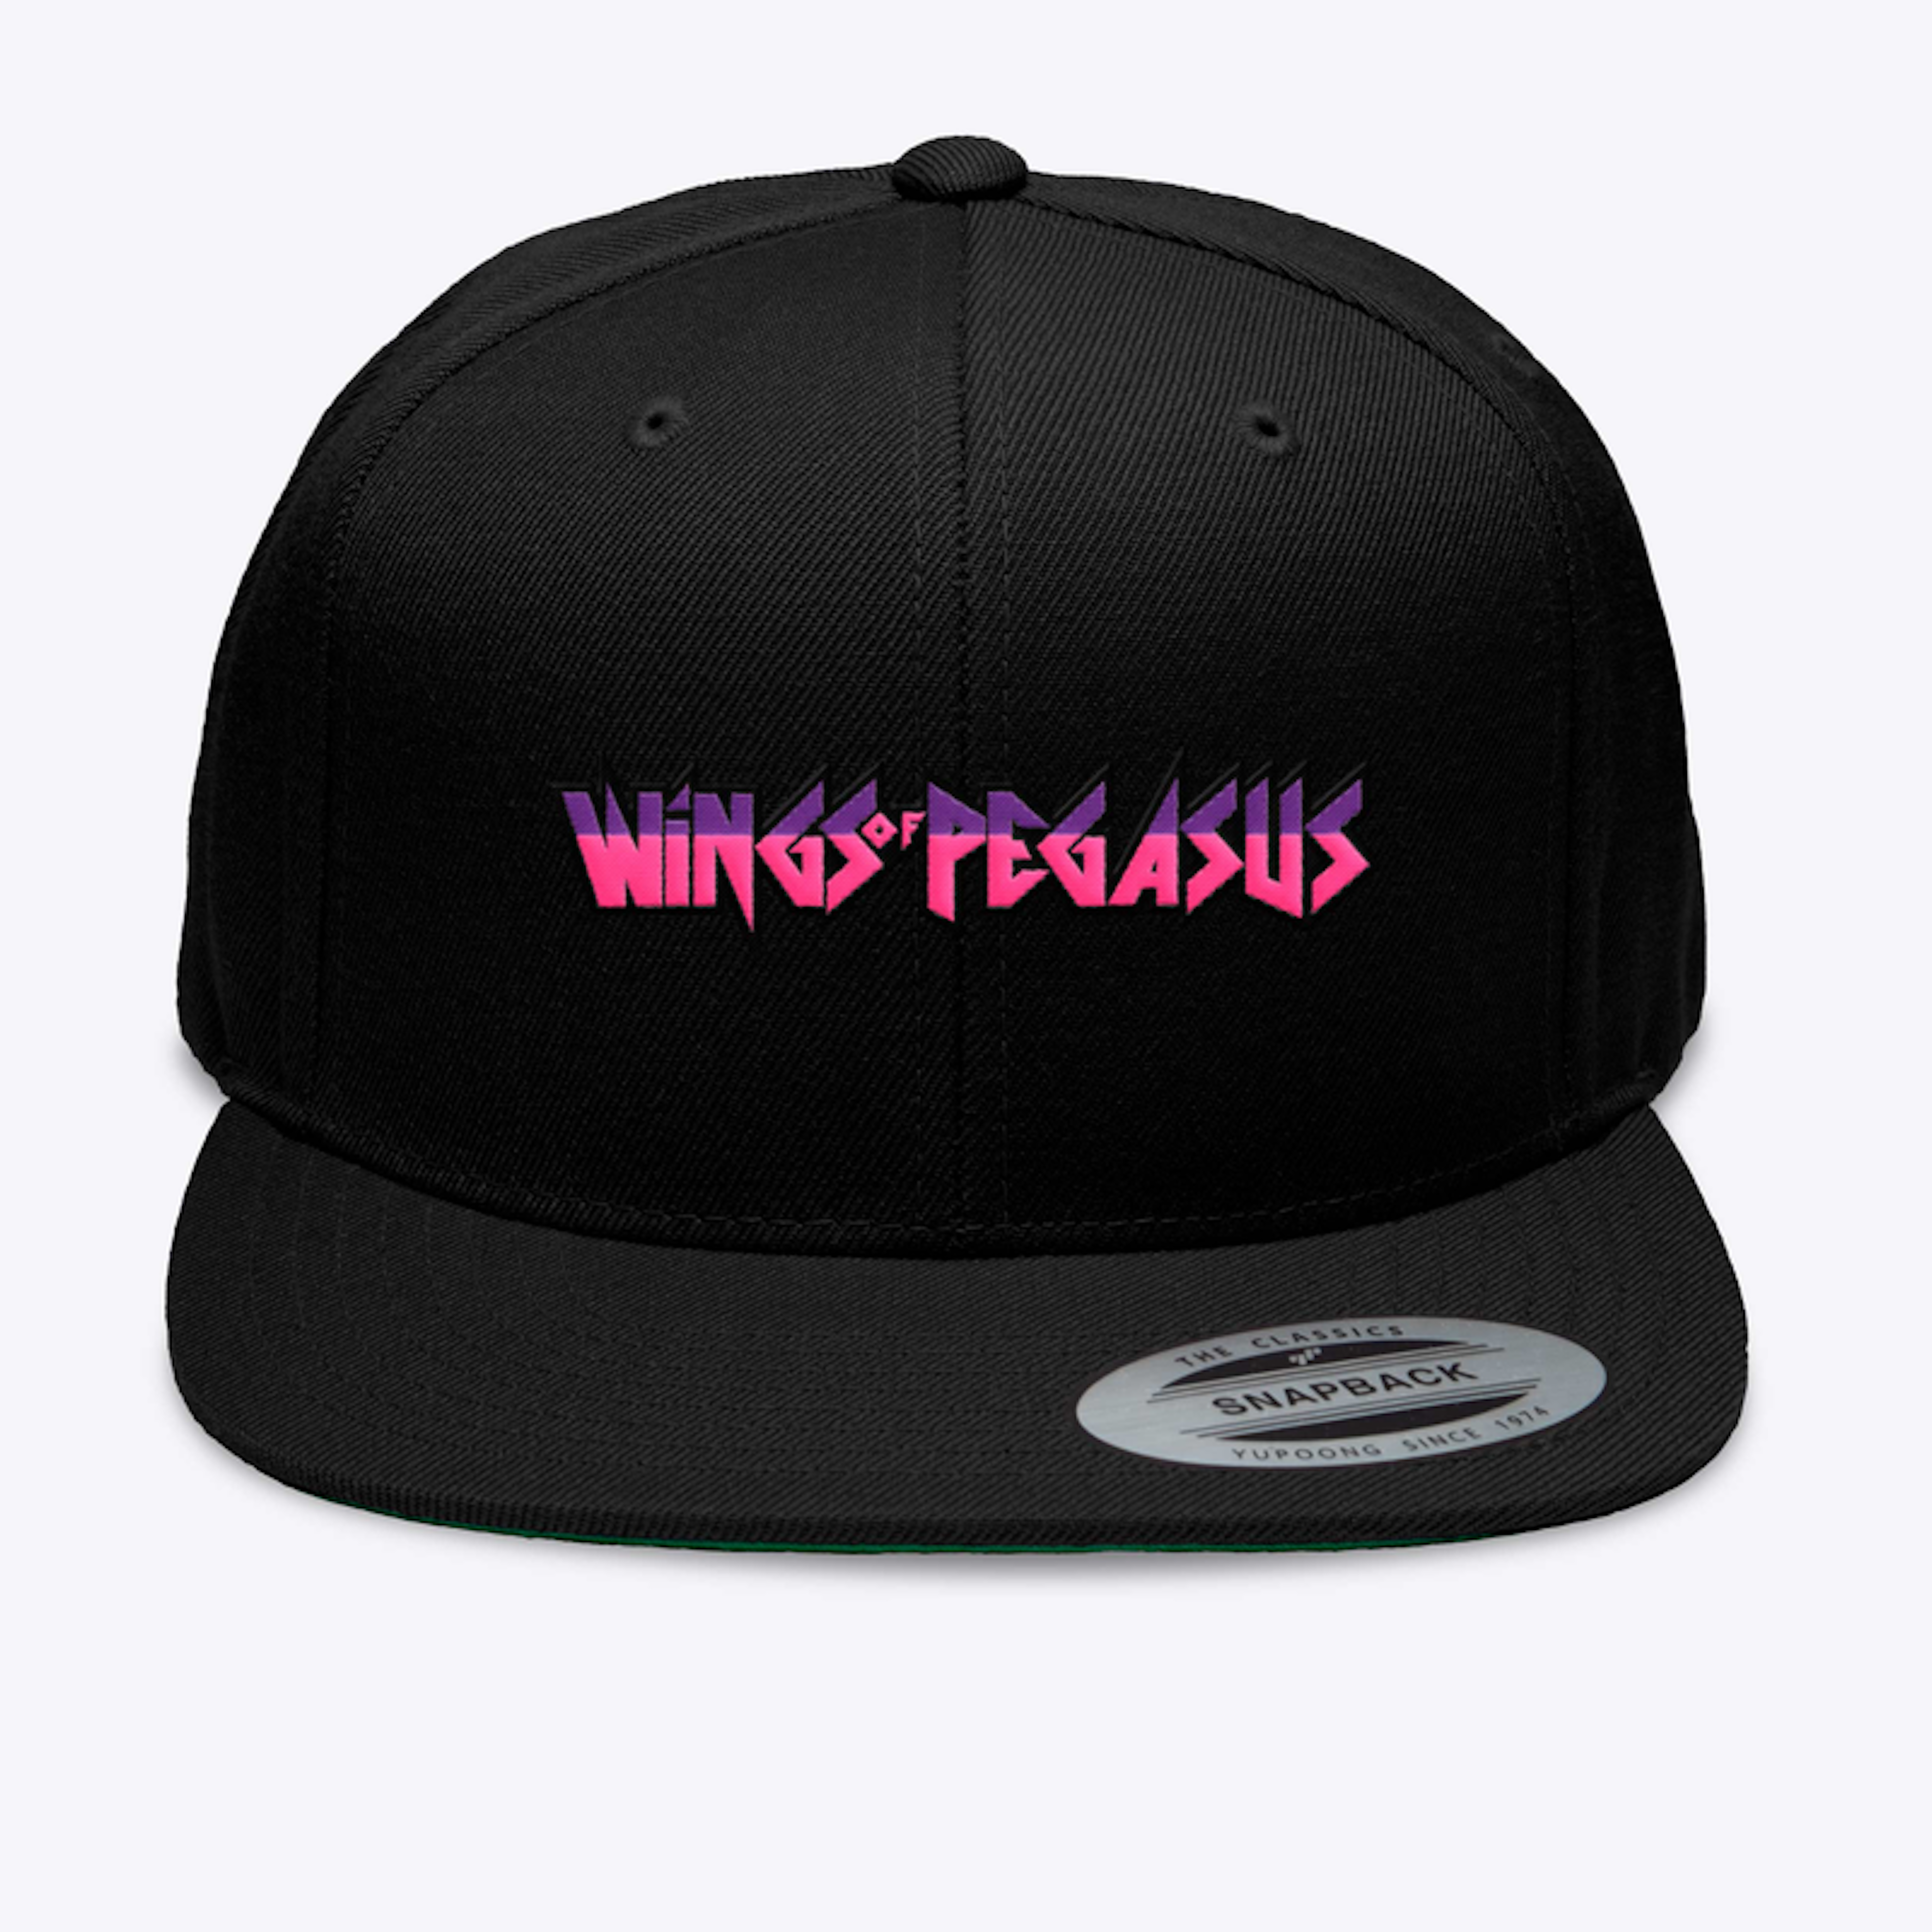 Wings of Pegasus hats